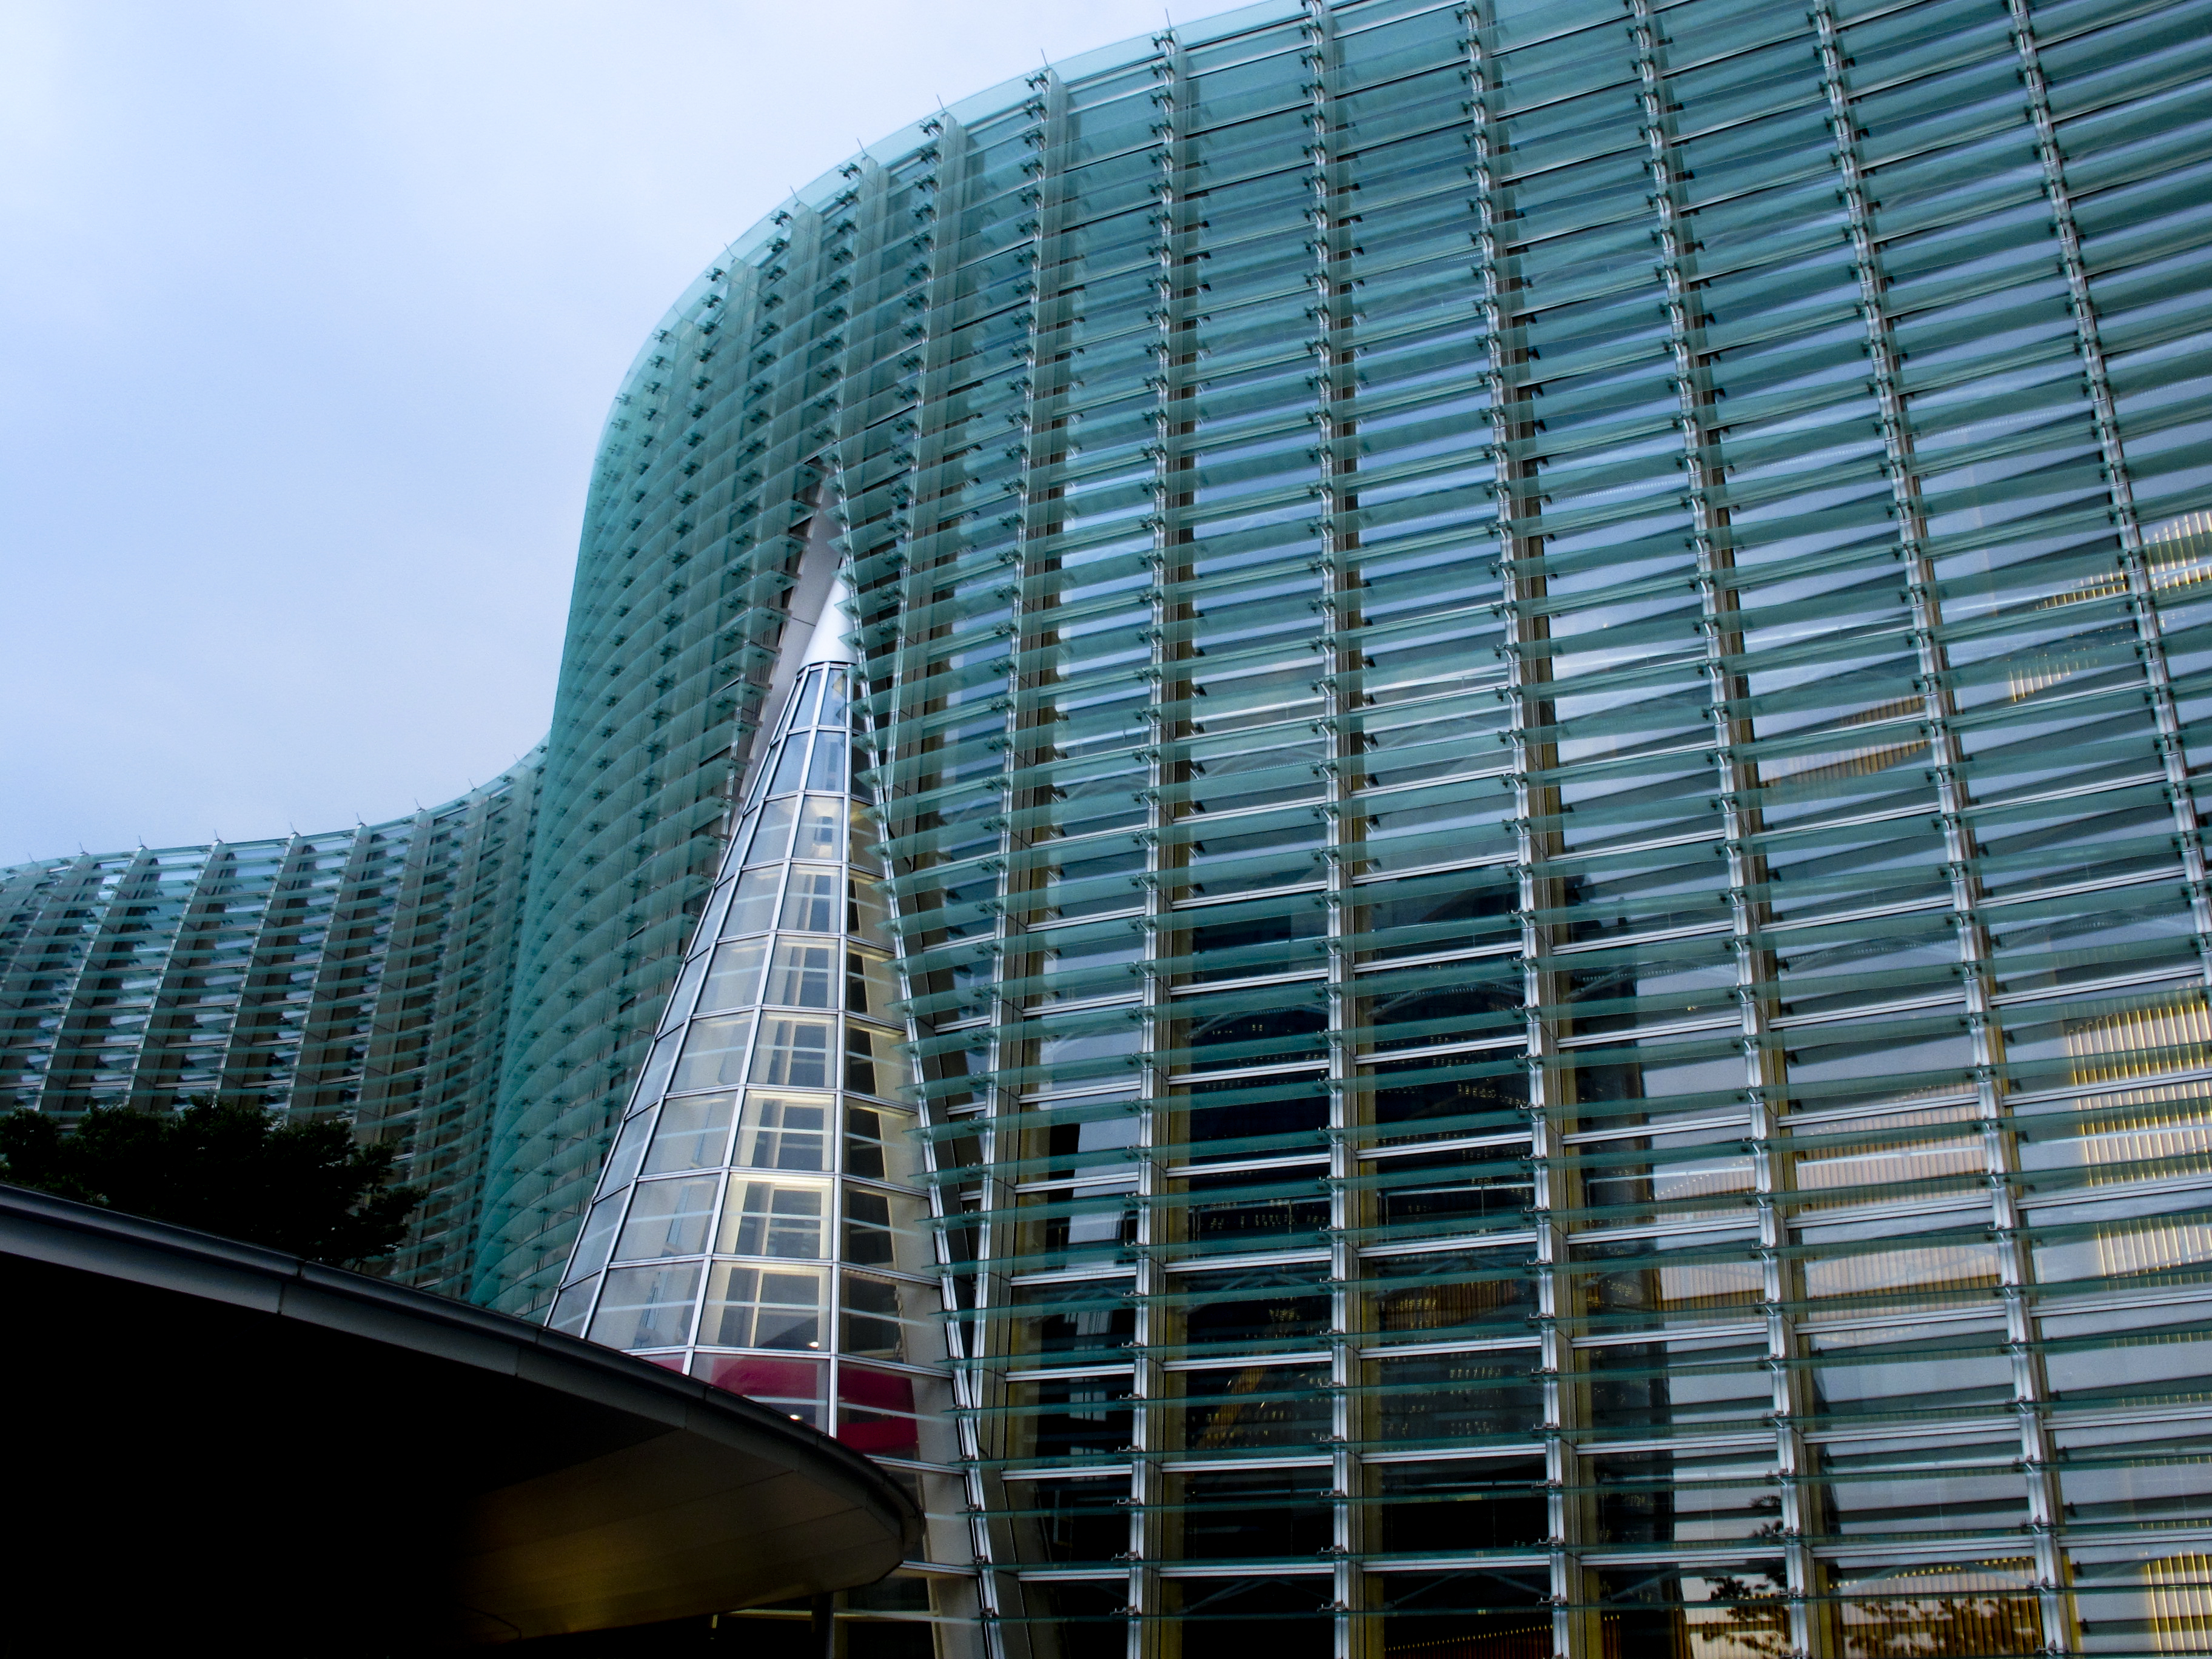 Architects: Kisho Kurokawa architect & associates + Nihon Sekkei, Inc.